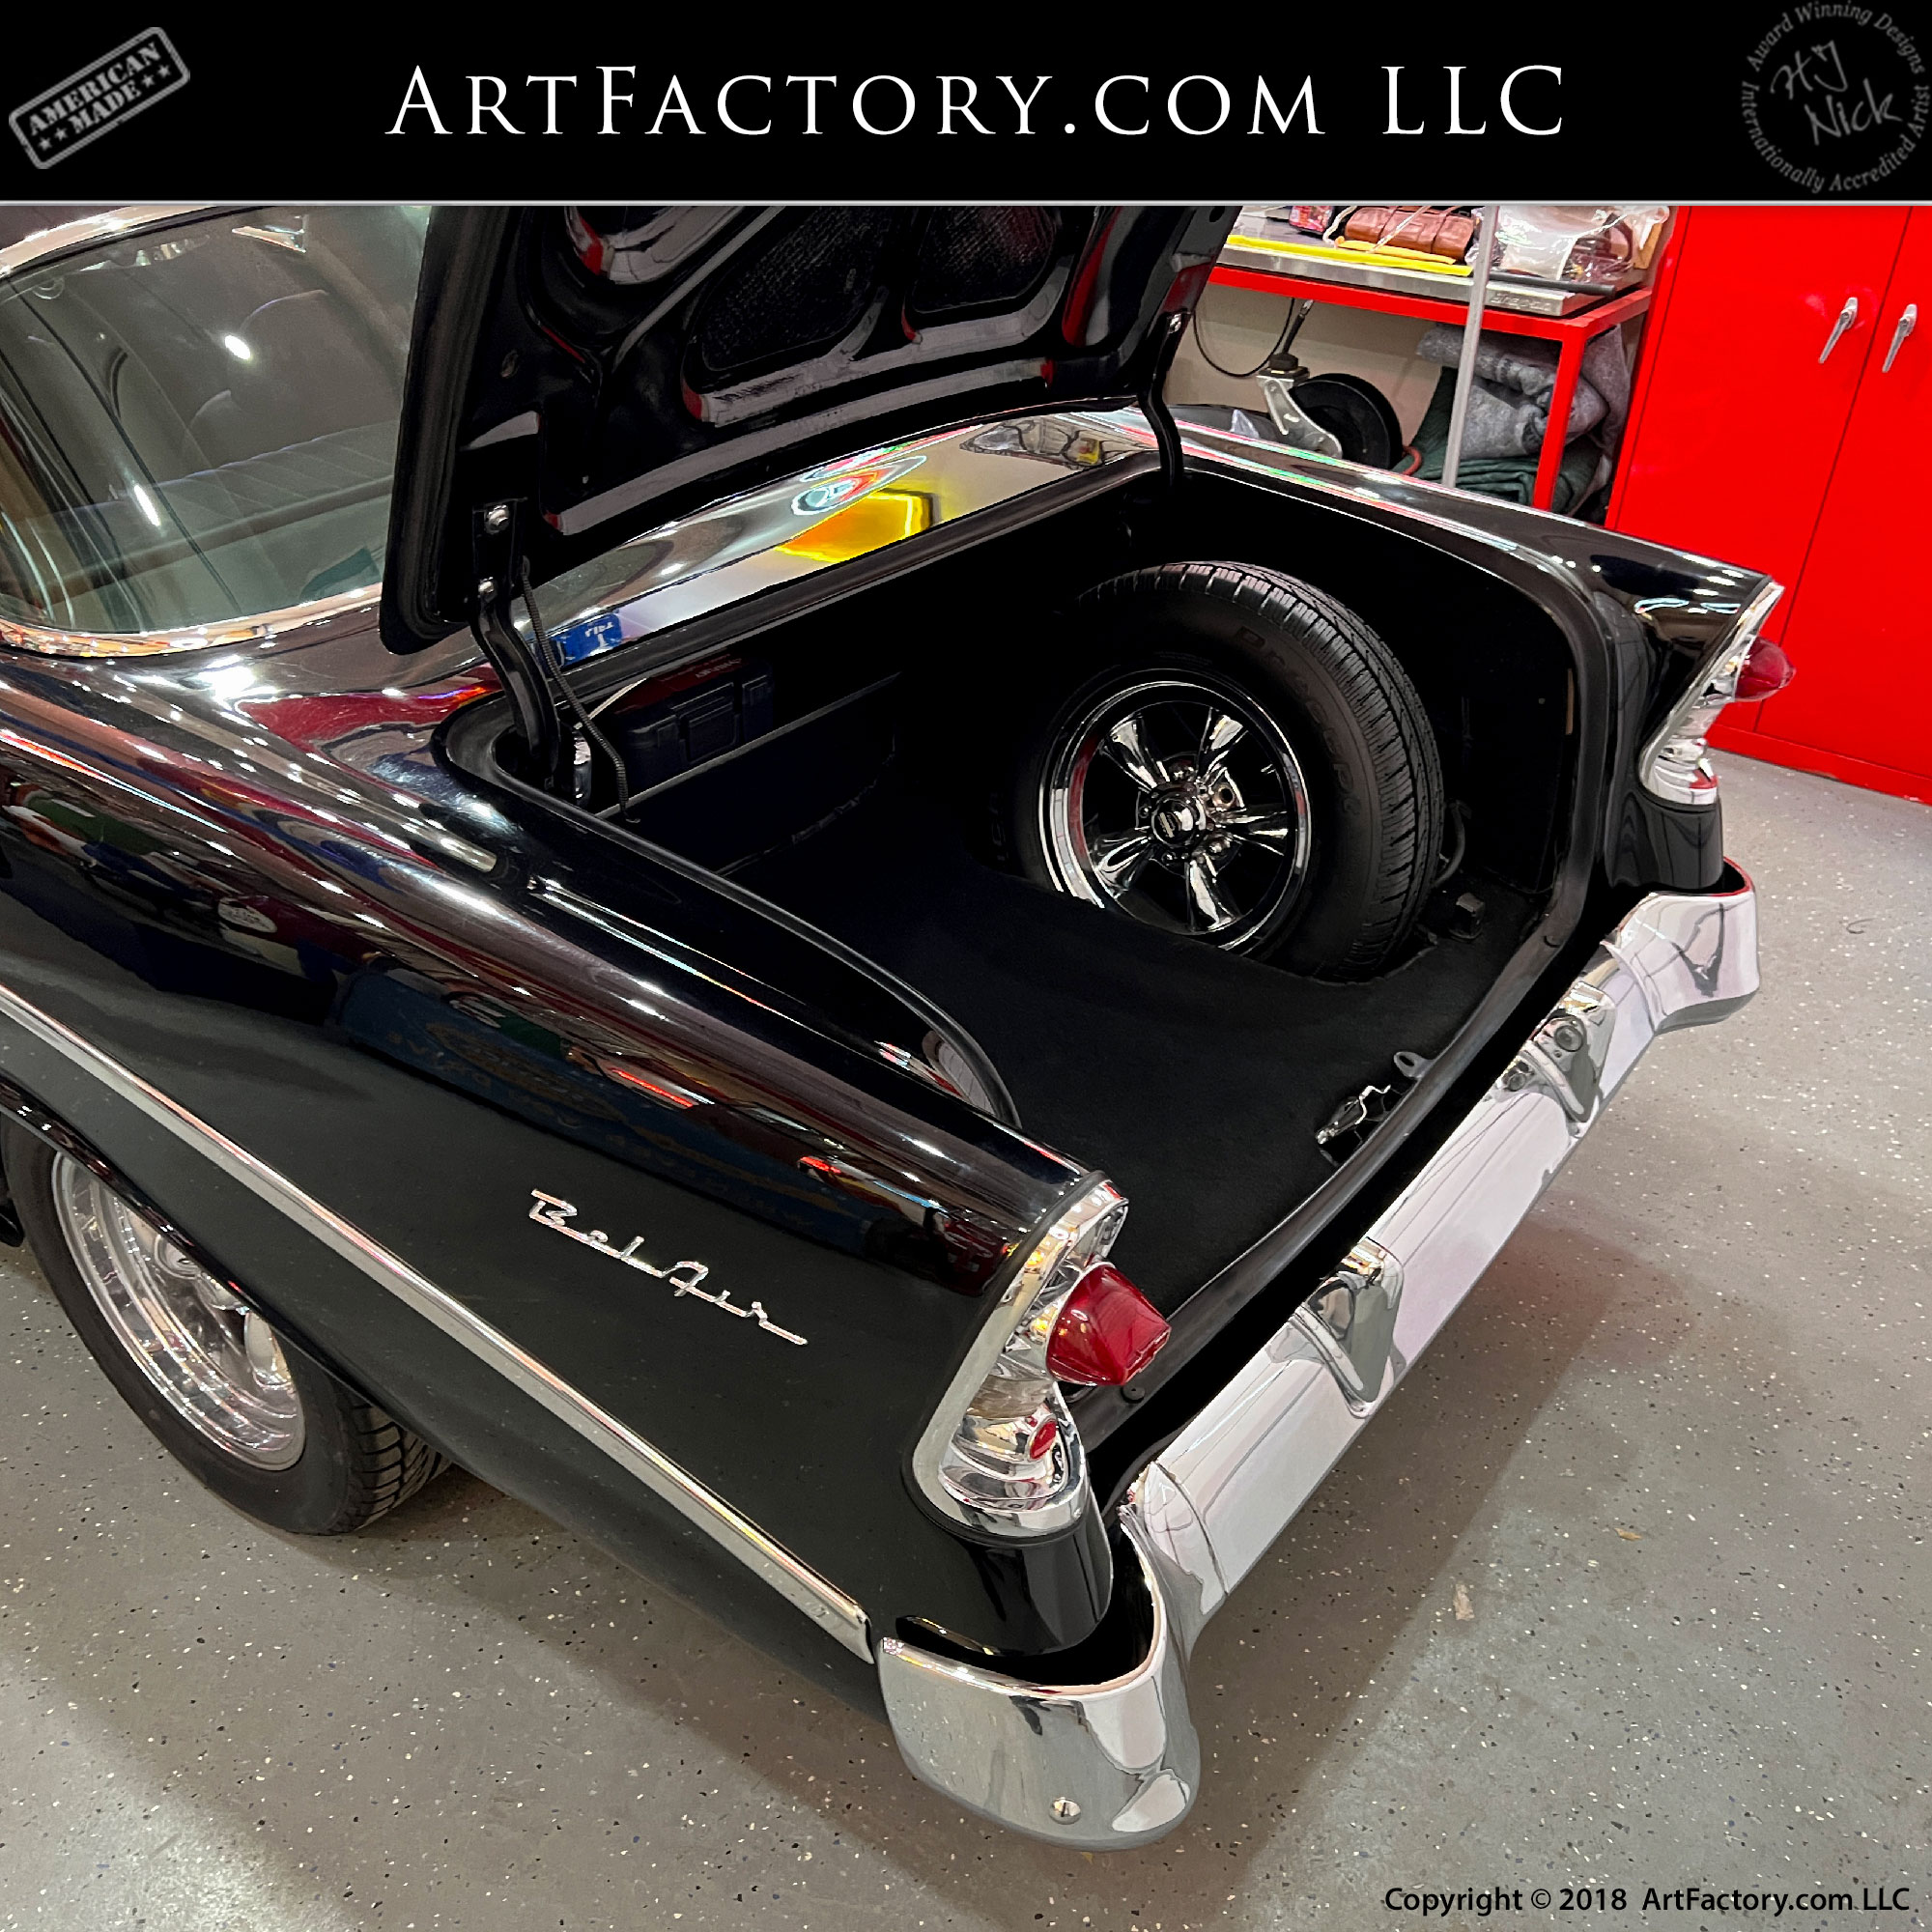 Vintage 56 Chevy Cruiser Car Betty